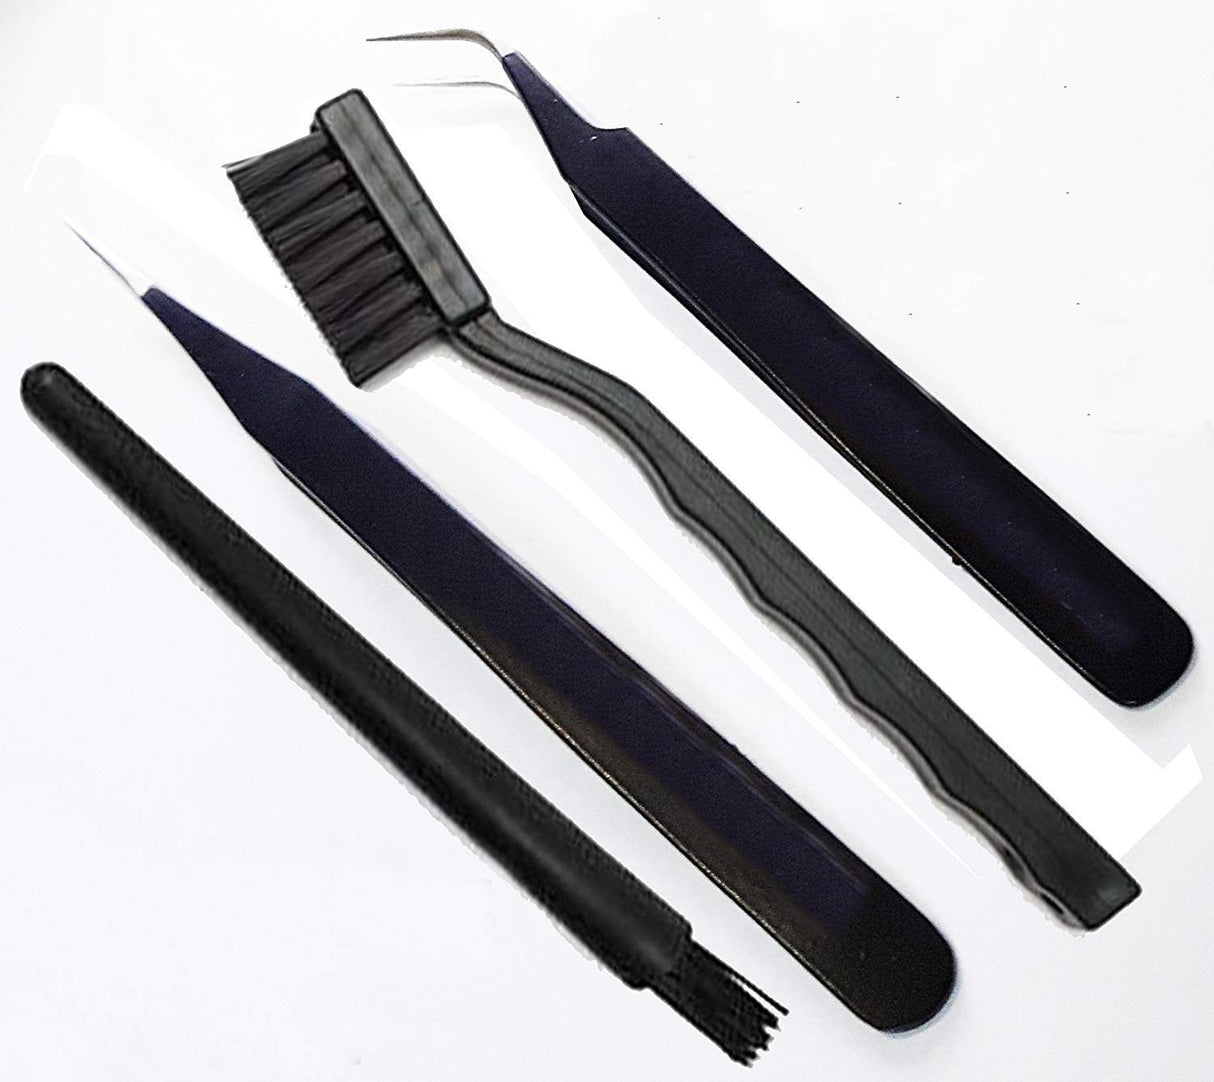 SCHOFIC 4 in 1 ESD Anti Static Tweezers & Brush Set,Made of Stainless Steel